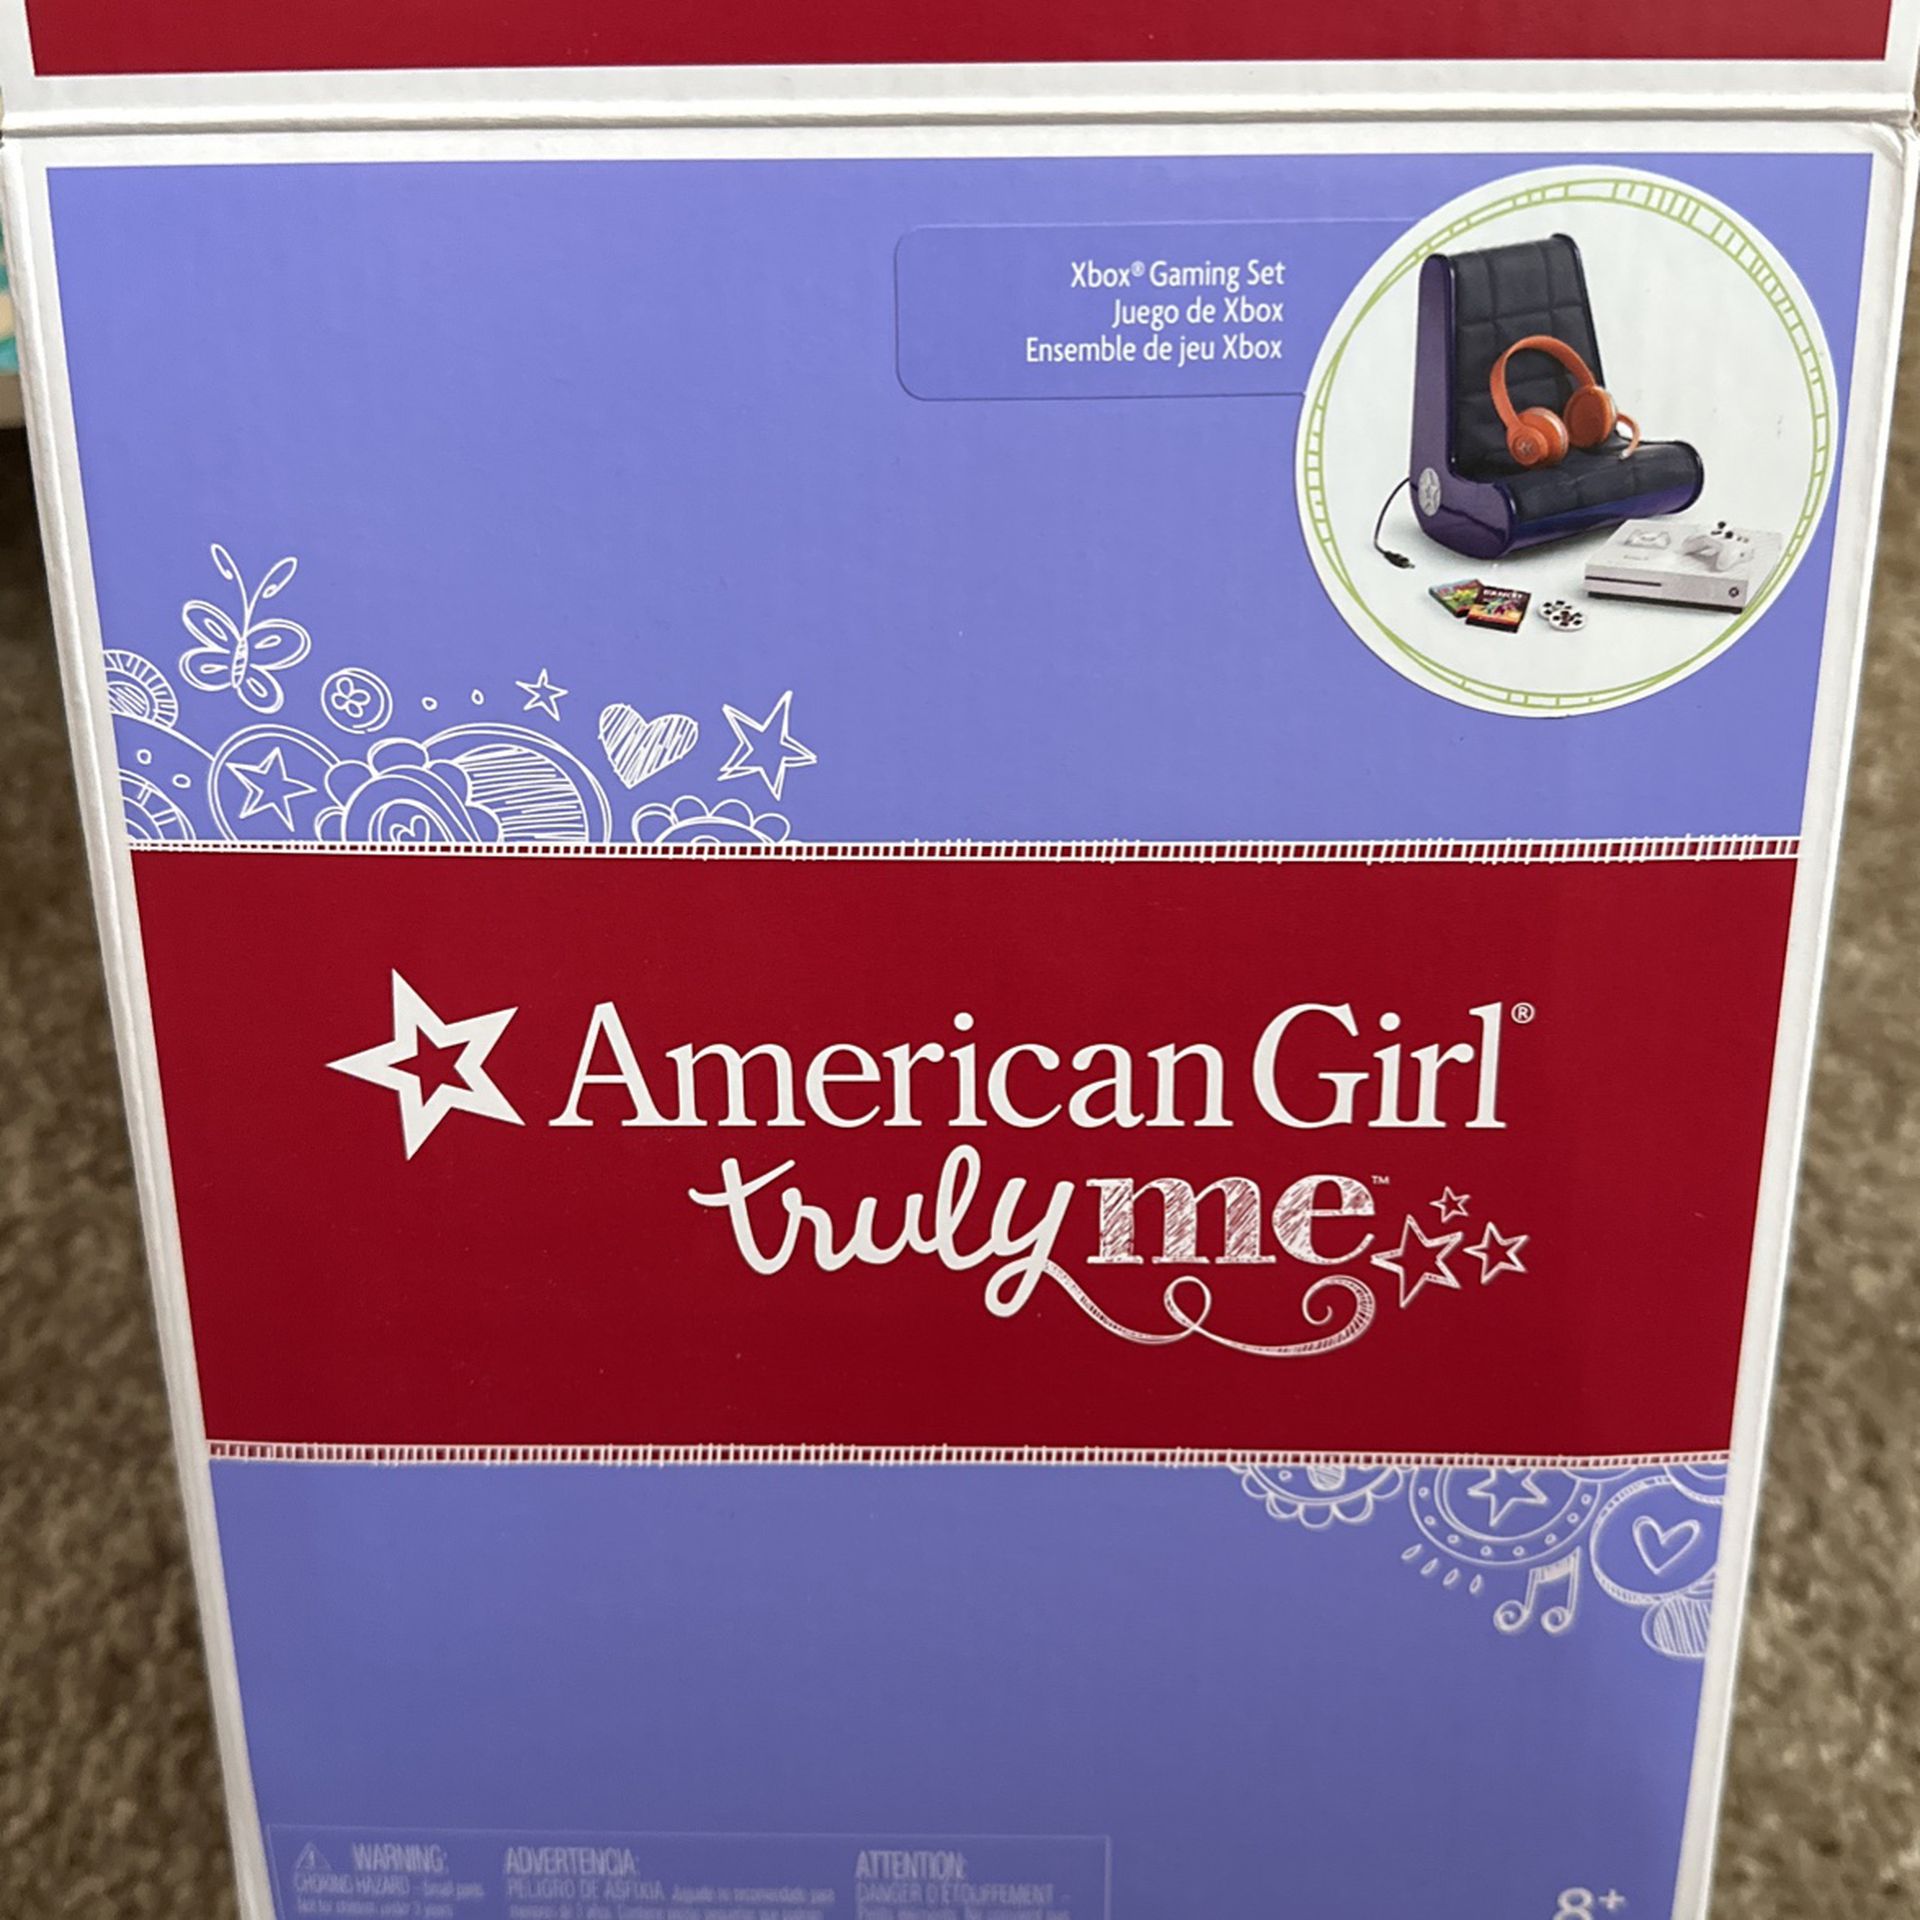 American Girl® + Xbox Gaming Set